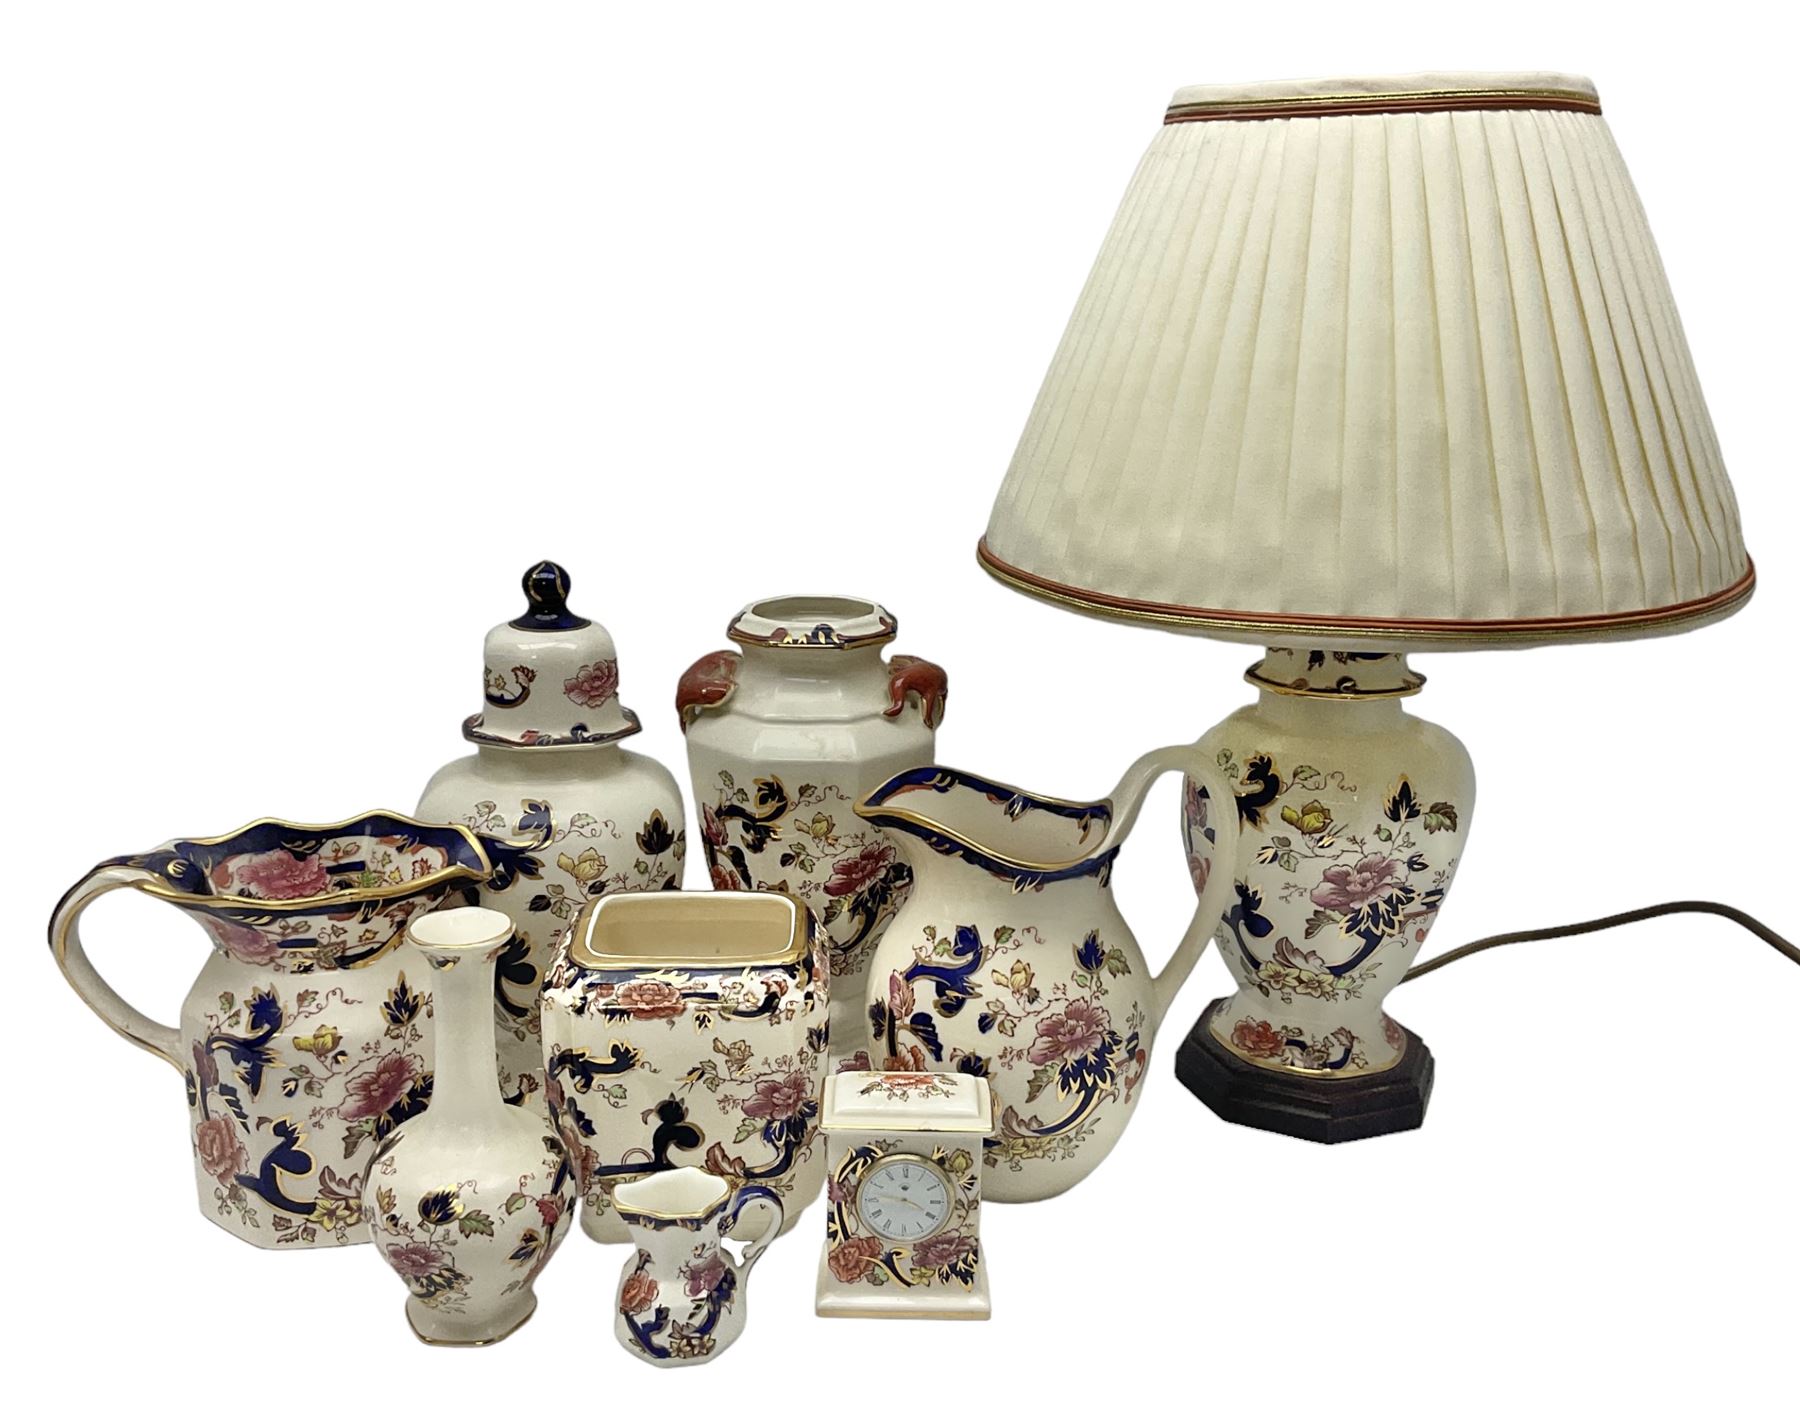 Table lamp Table lamp 20th Century Baluster porcelain va…